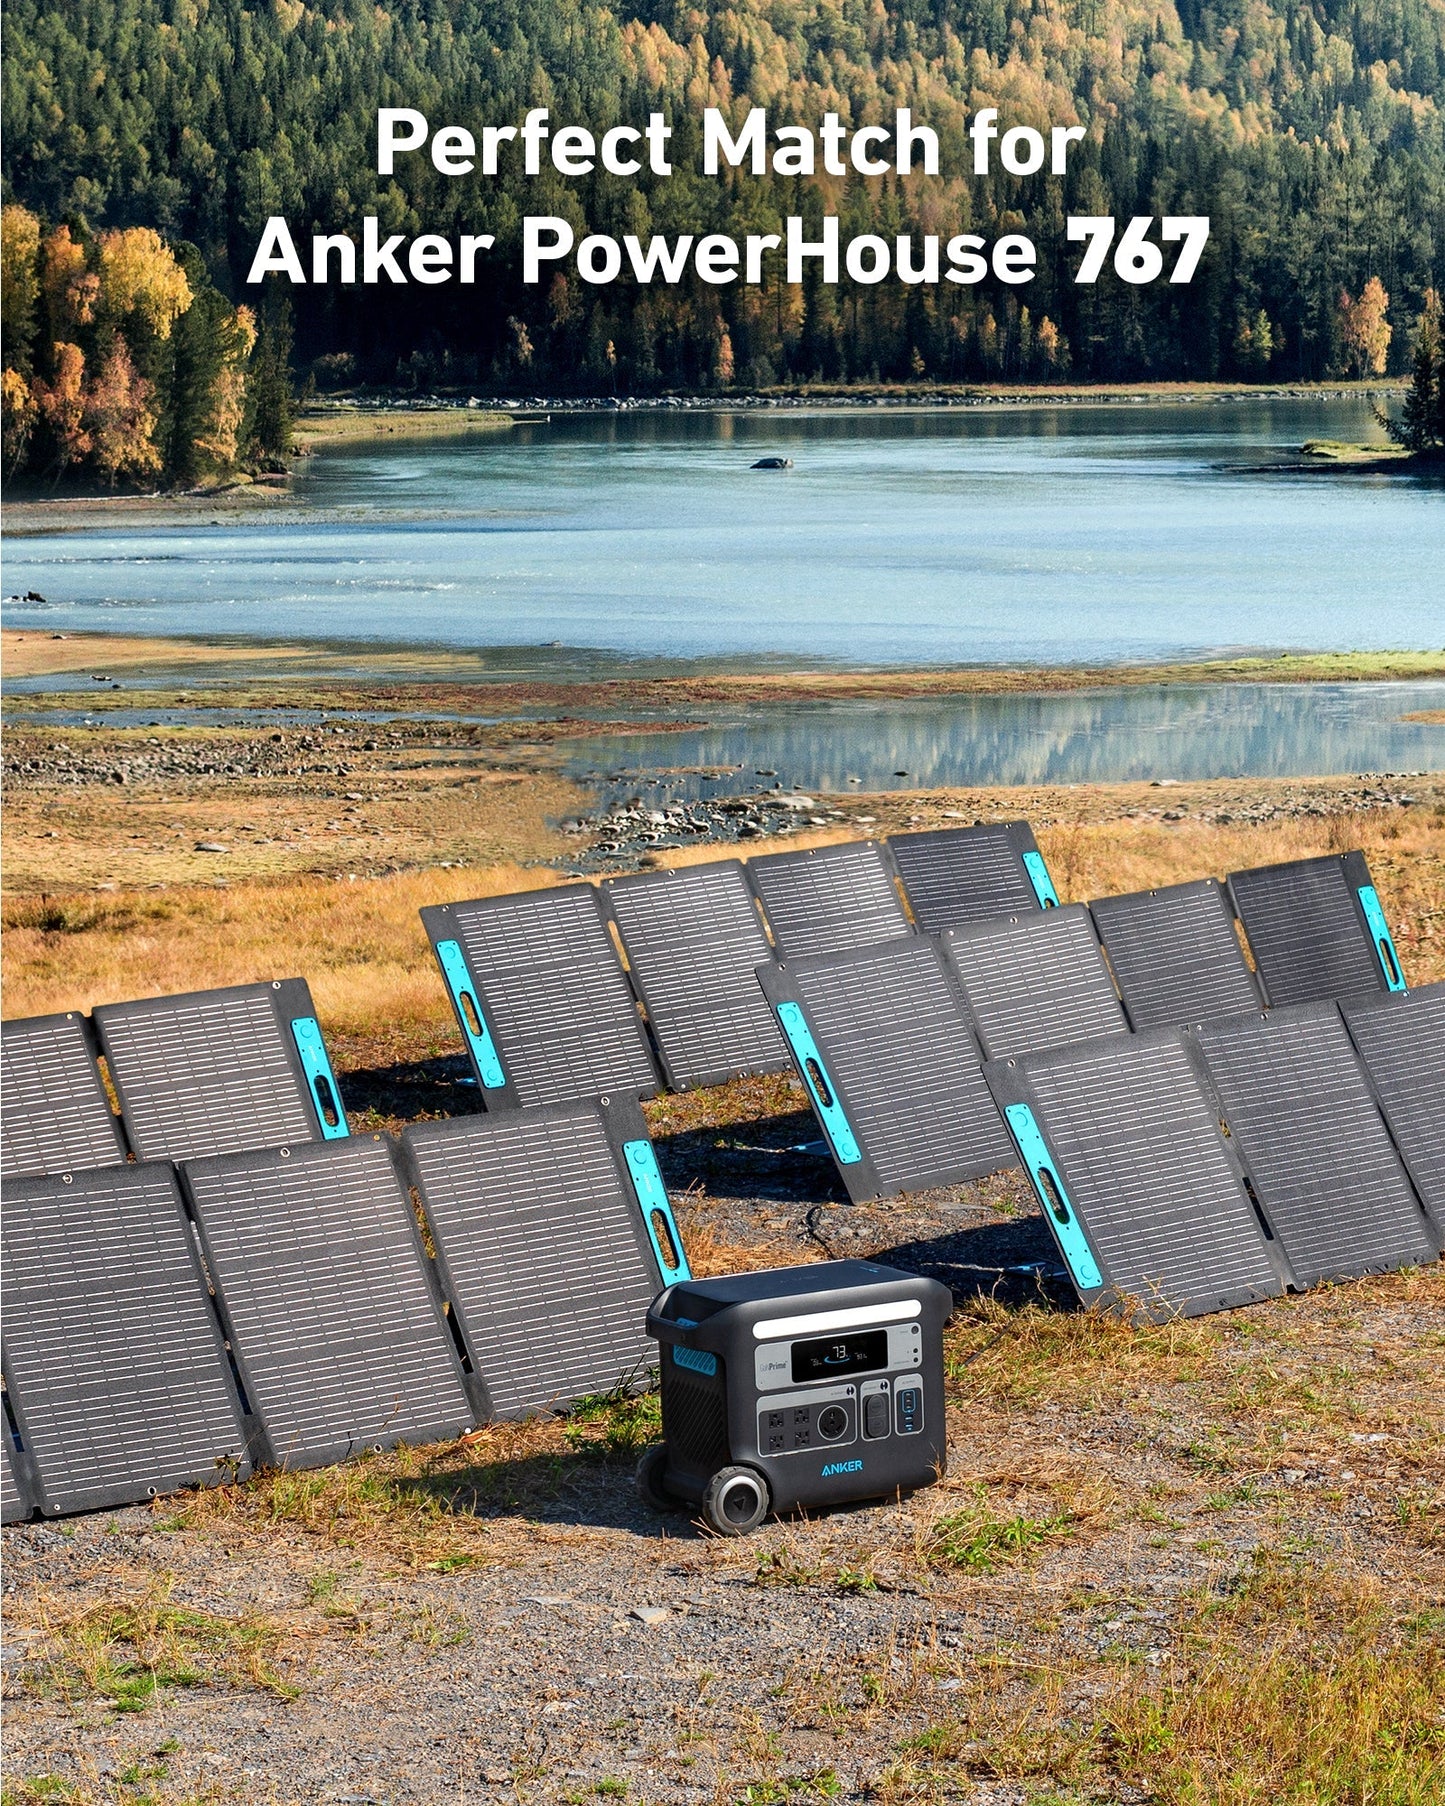 Anker SOLIX 200W Foldable Solar Panel